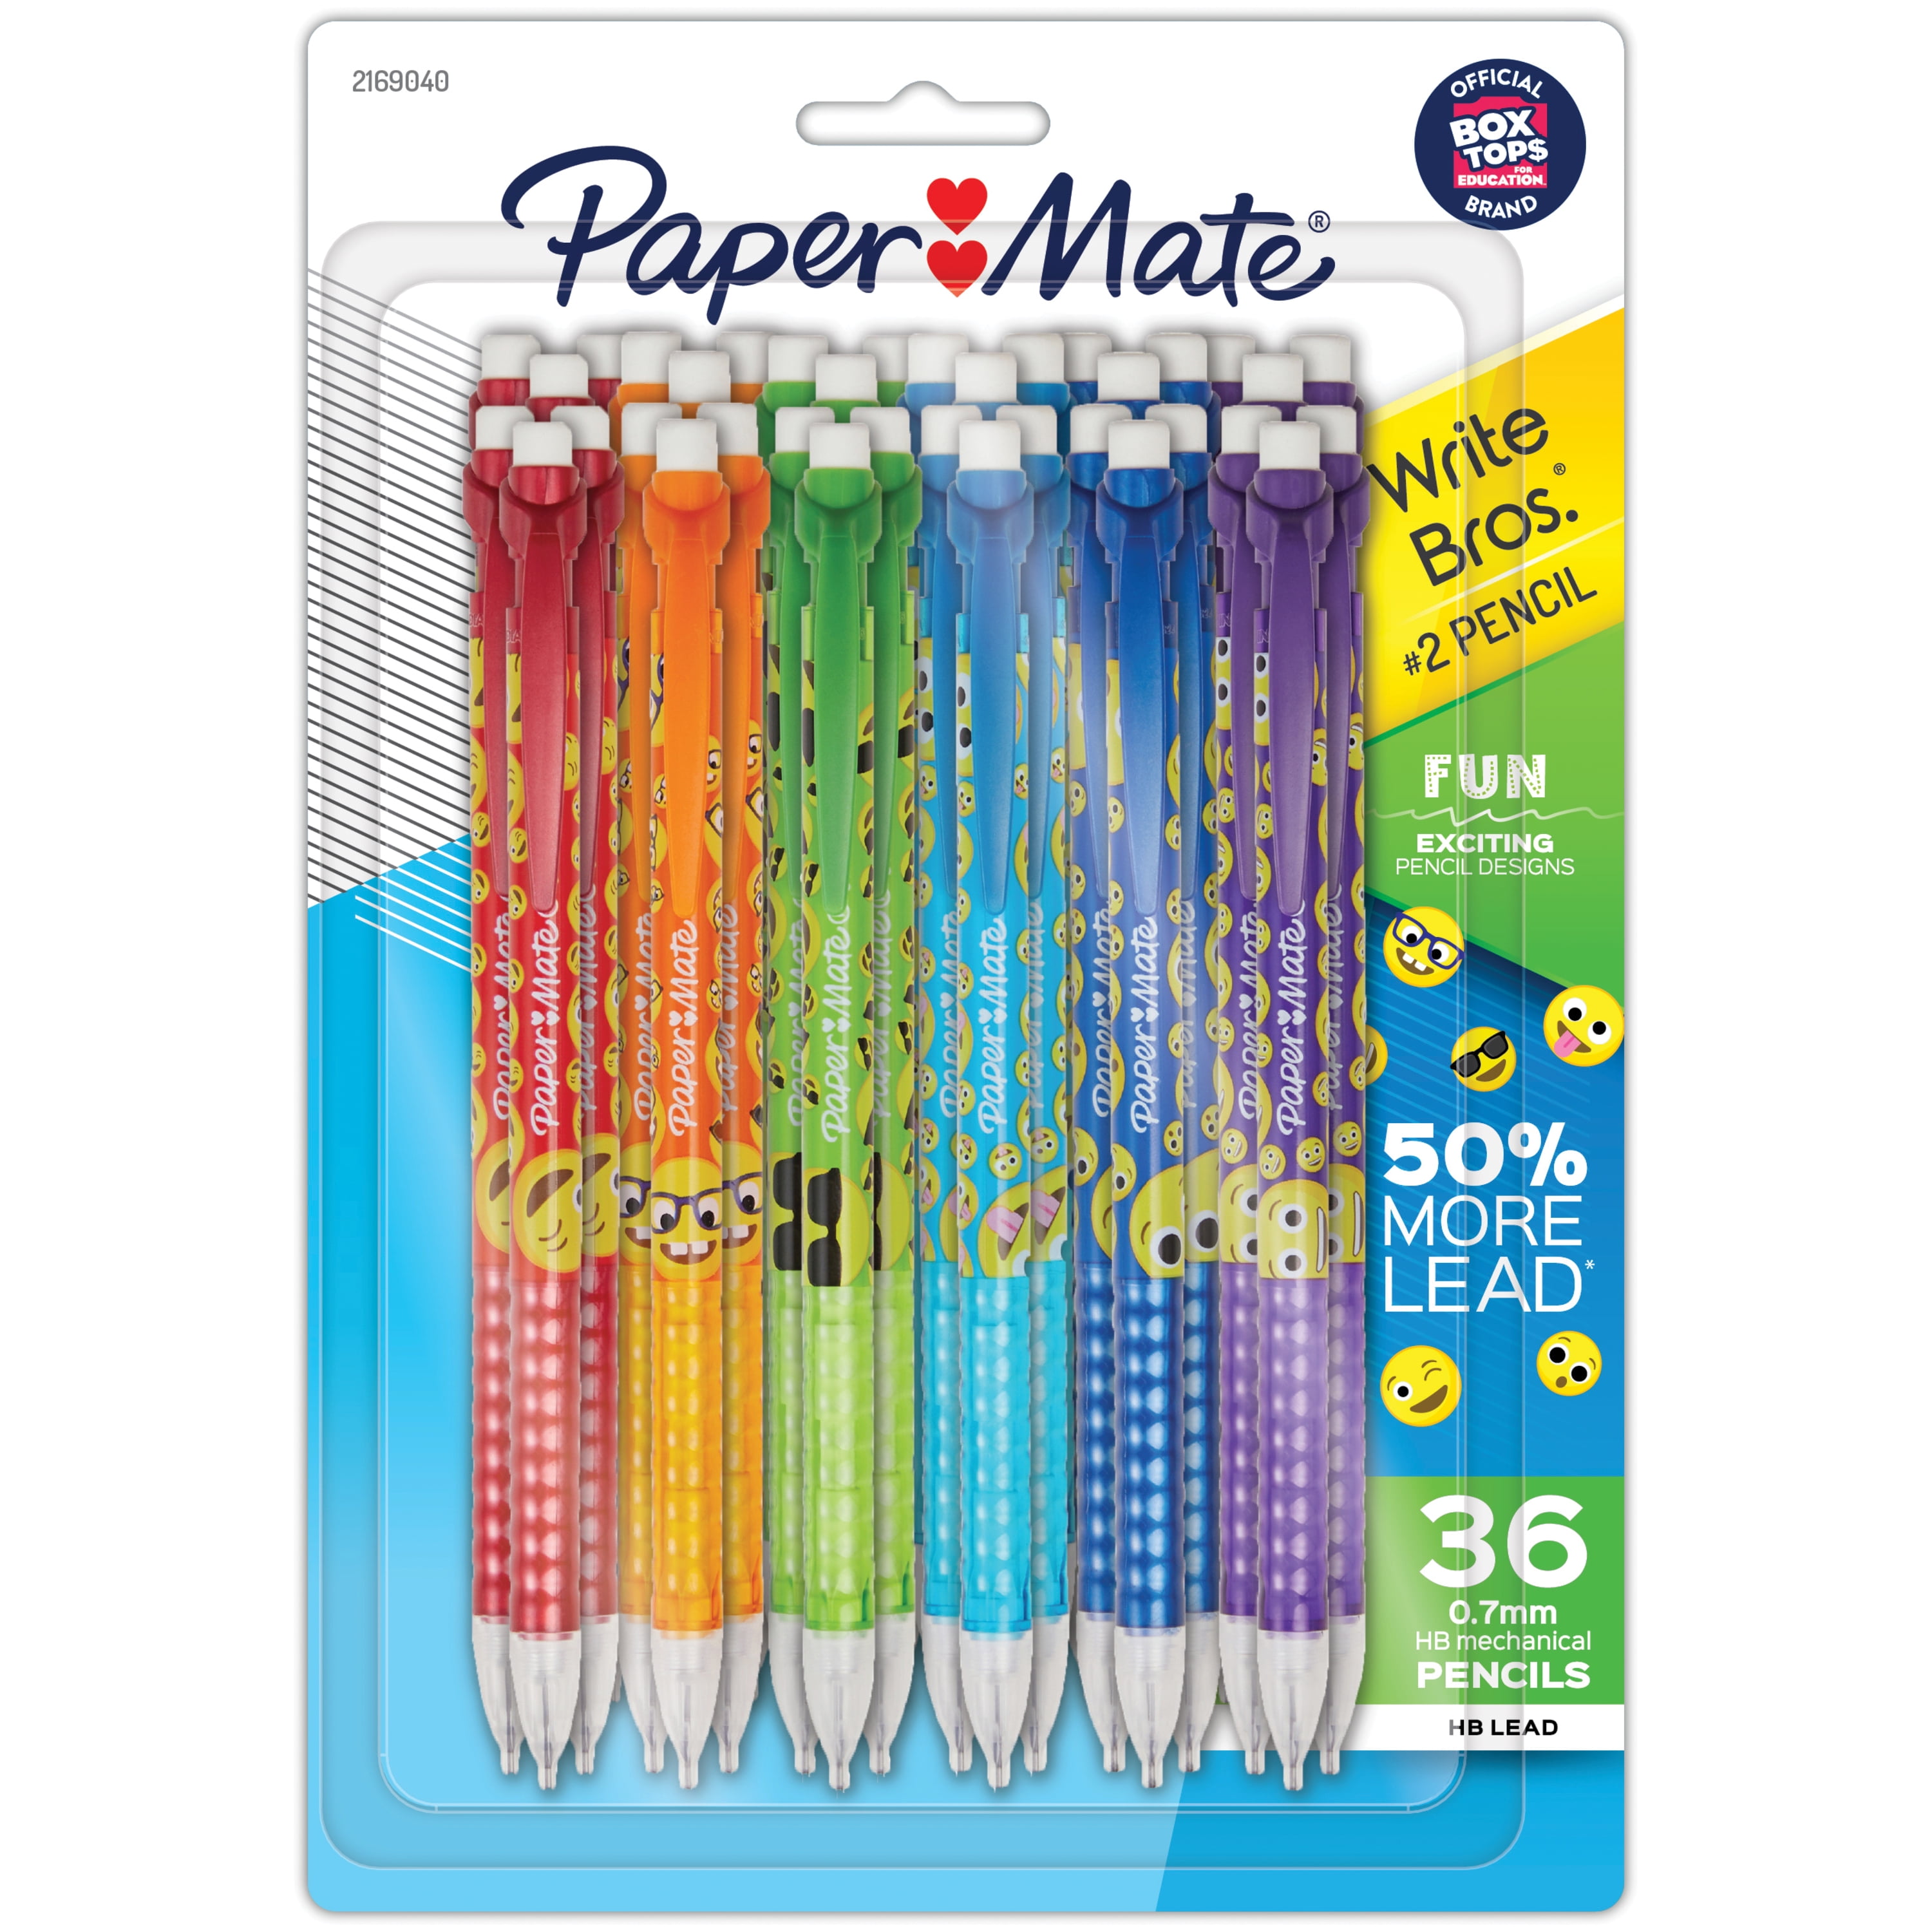 New Paper Mate EMOJI Mechanical Pencils 0.7mm 12 Count Write Bros #2 HB Lead